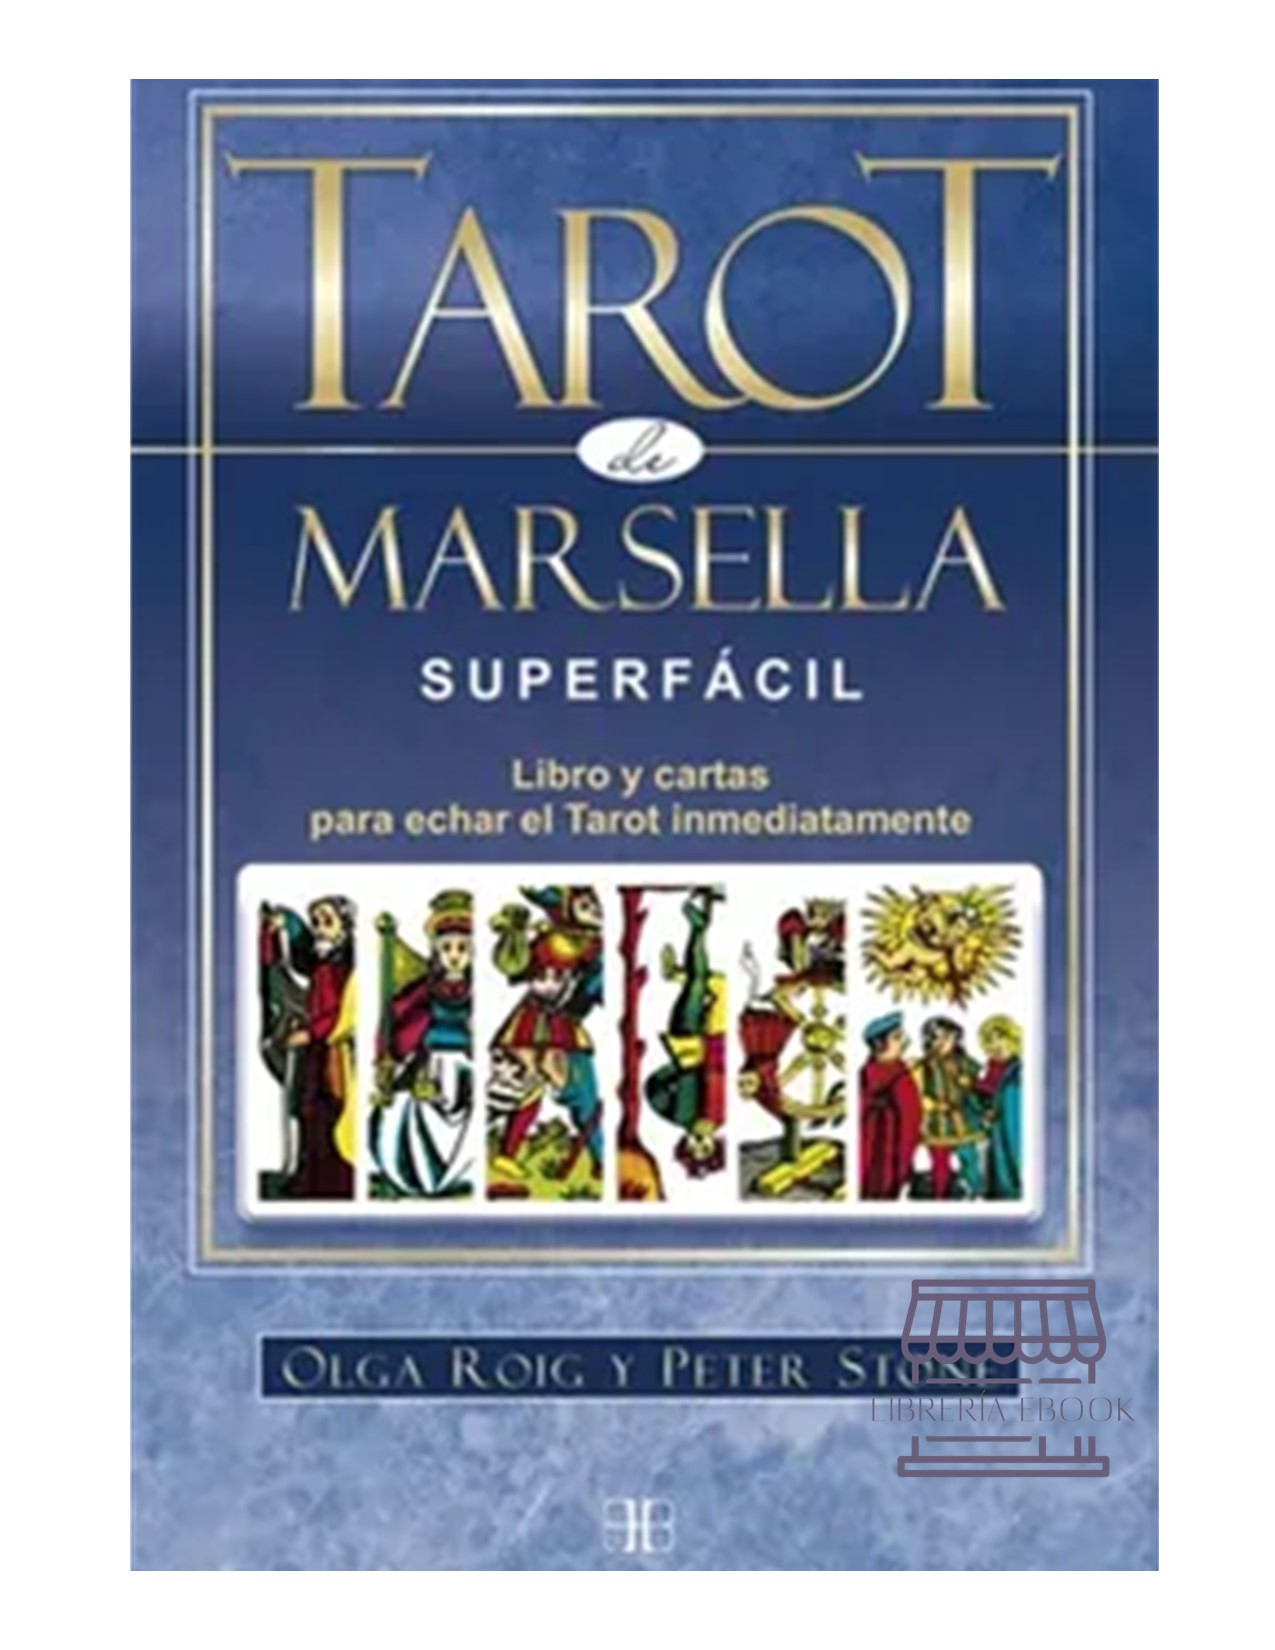 Tarot De Marsella Superfacil